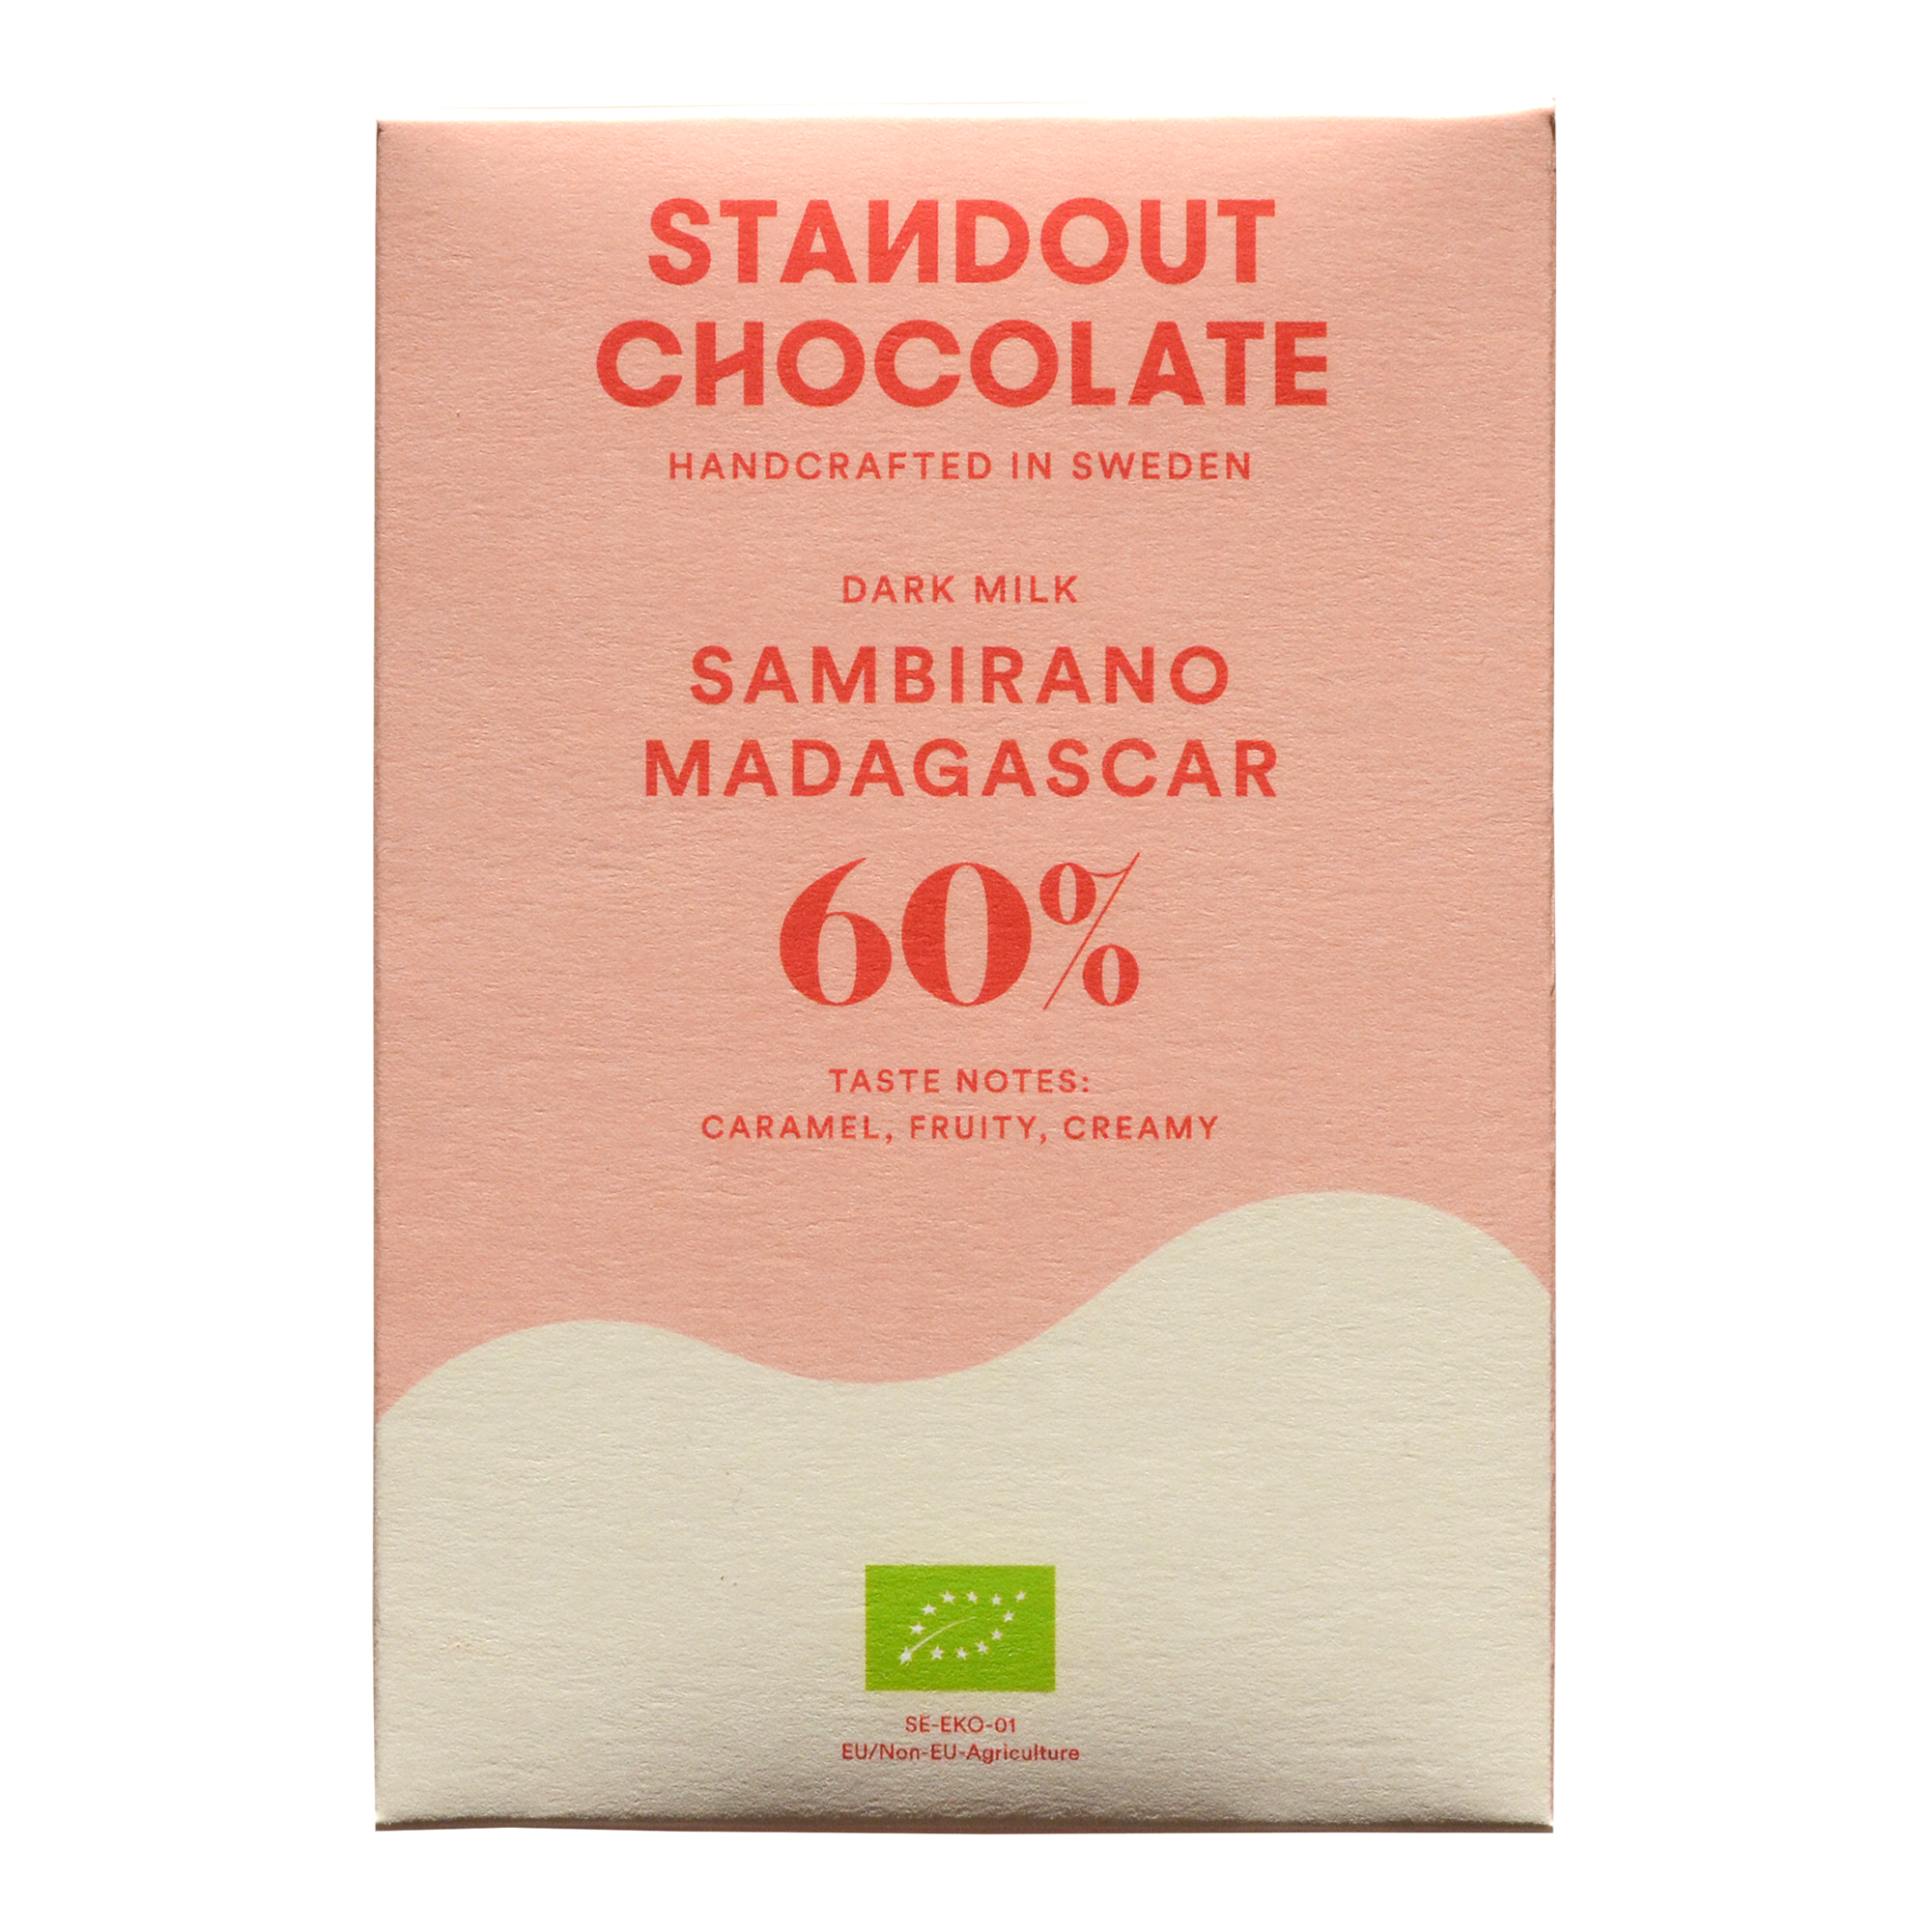 Standout Chocolate Sambirano Madagascar 60% Dark Milk